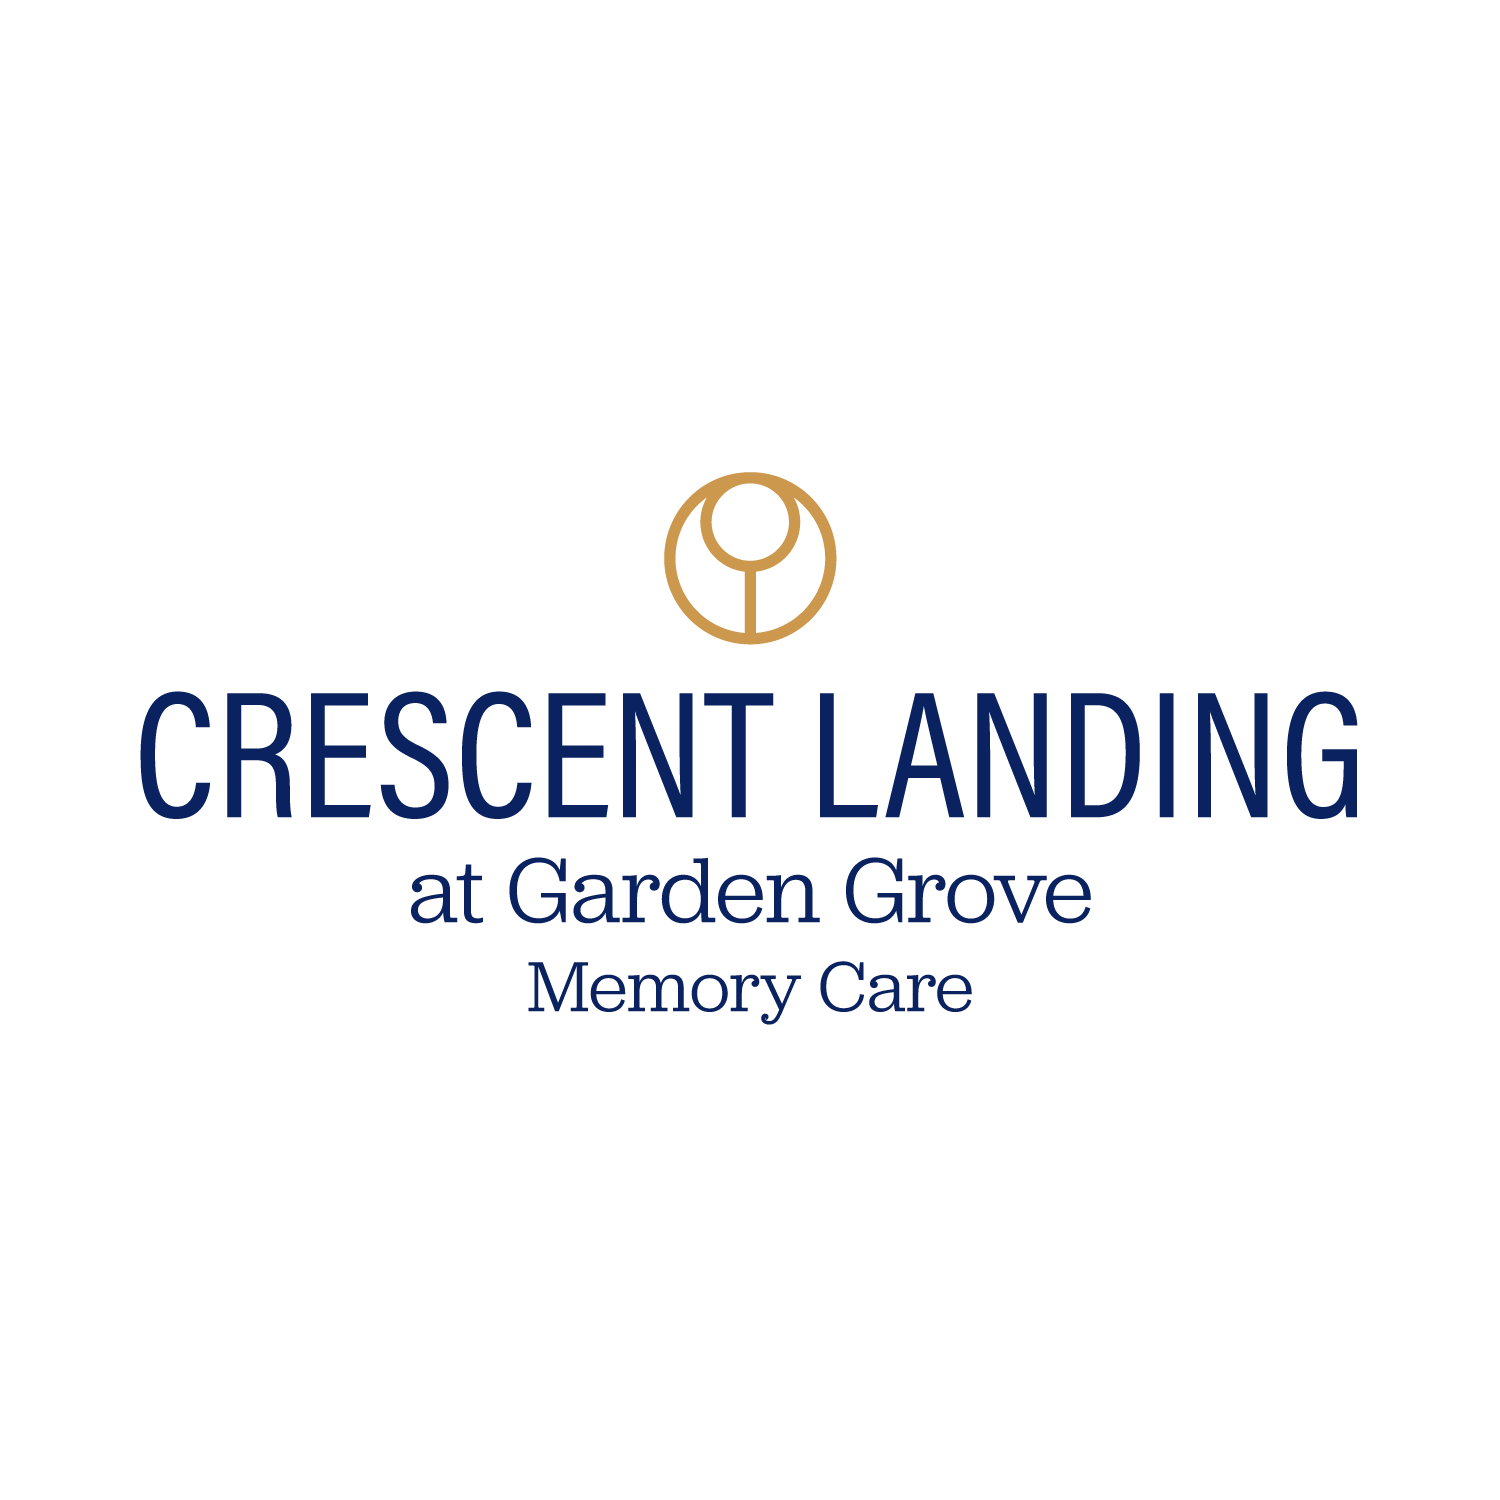 Crescent Landing at Garden Grove Memory Care